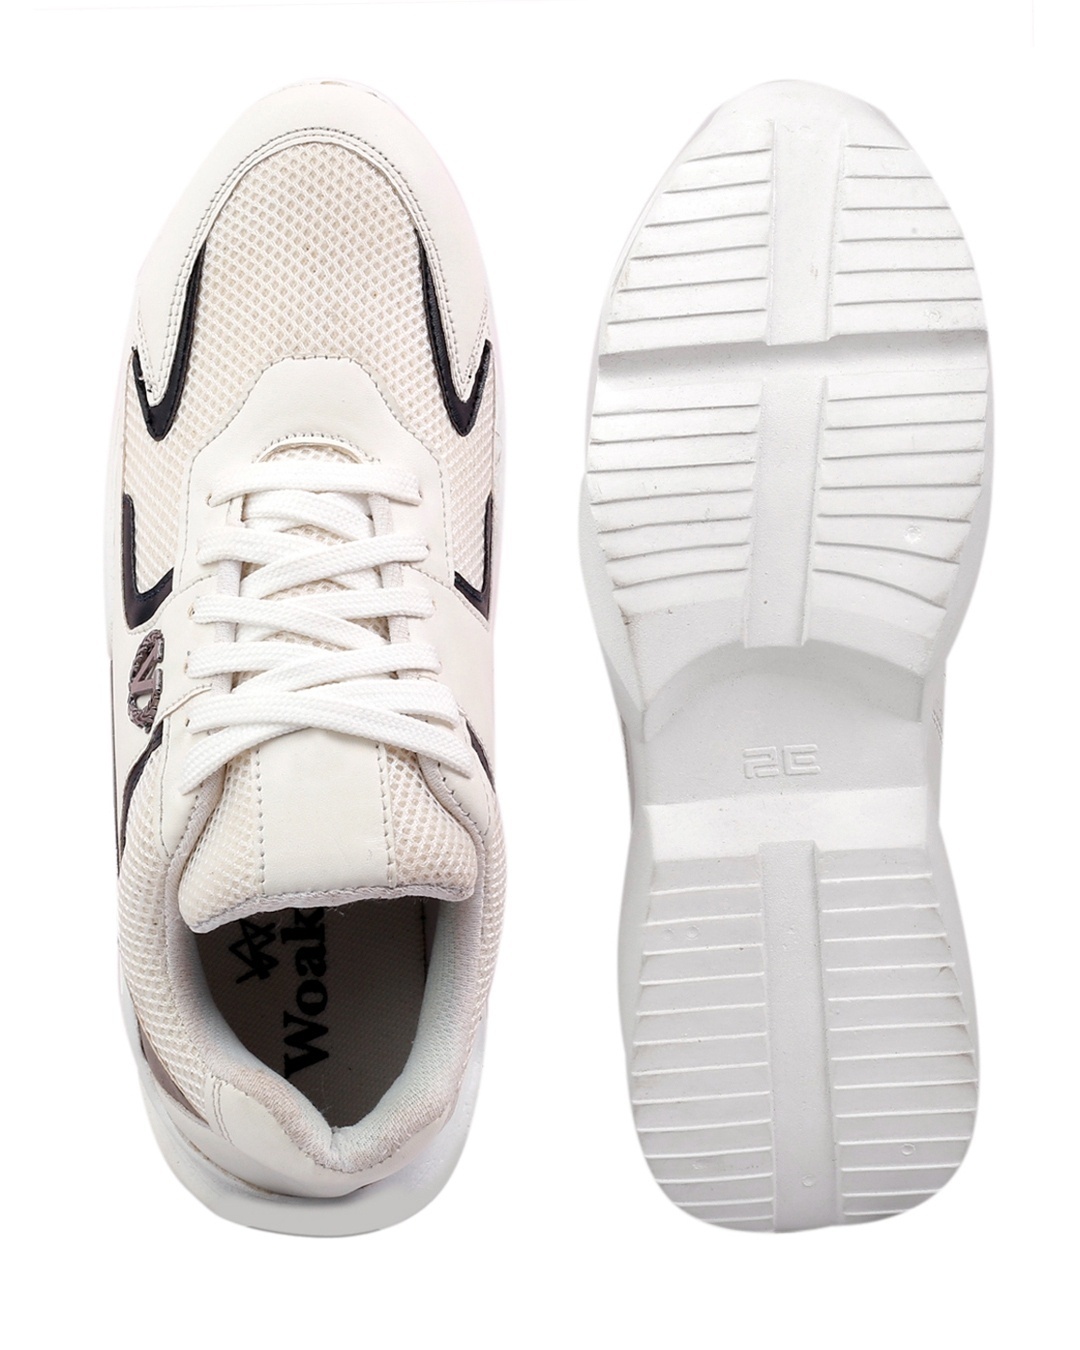 Shop Men's White Stylish Sports Shoes